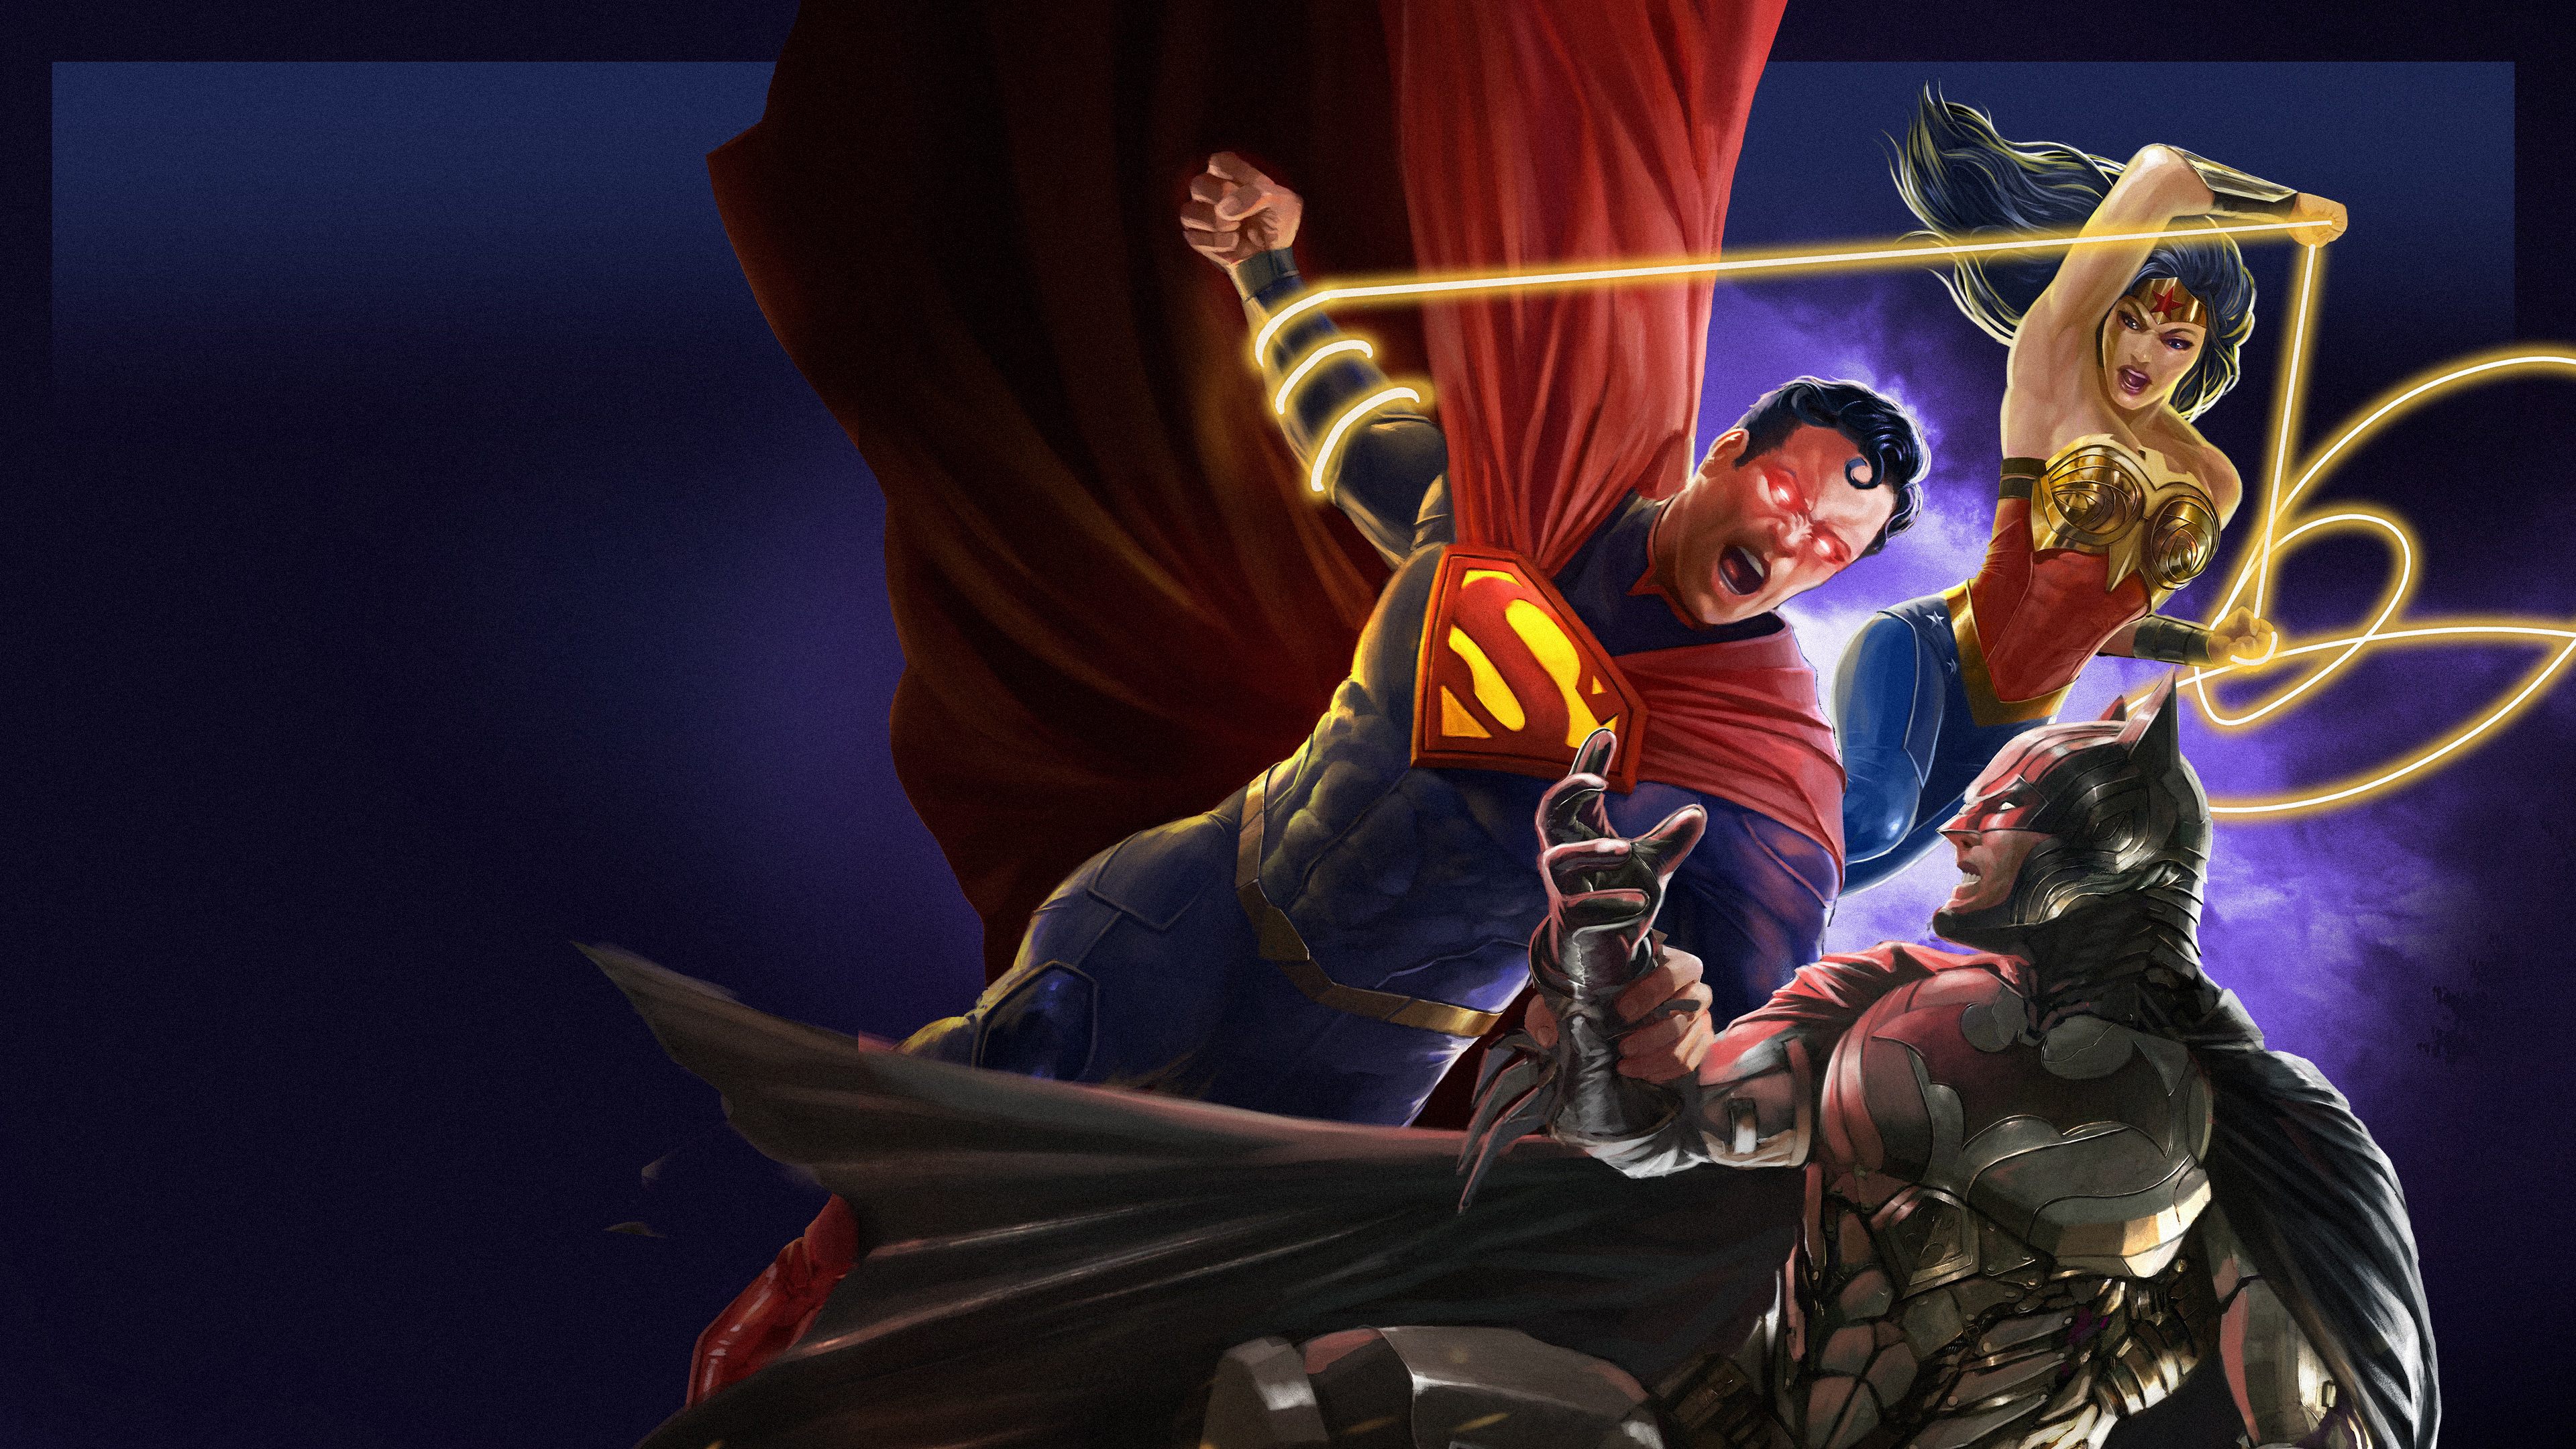 Descarga gratuita de fondo de pantalla para móvil de Superhombre, Películas, Dc Comics, Hombre Murciélago, La Mujer Maravilla, Injustice: Gods Among Us.